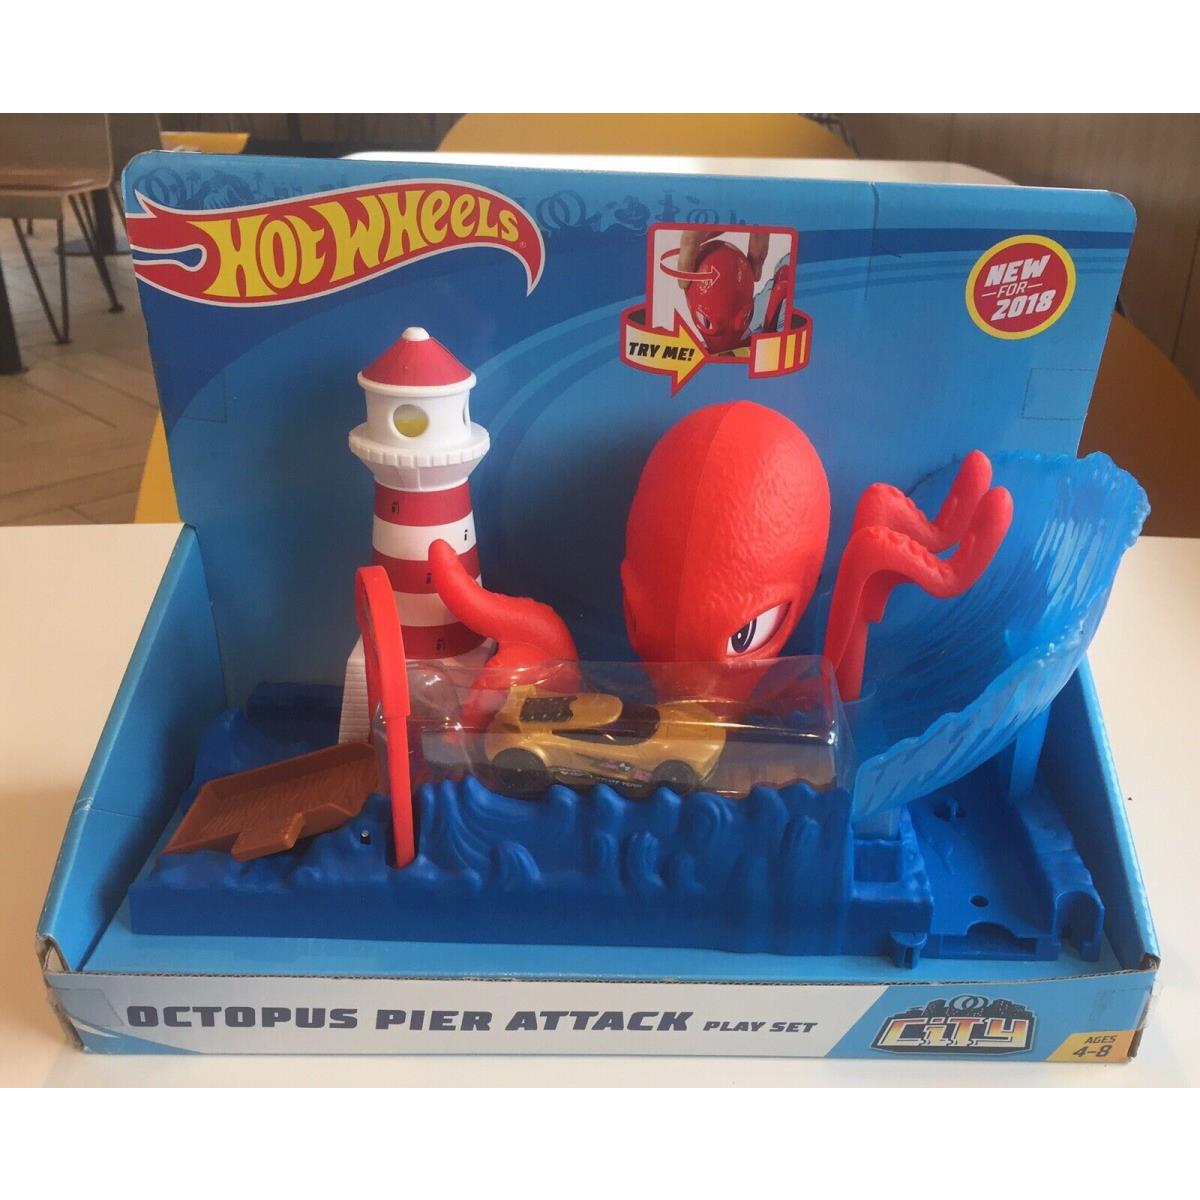 Hot Wheels City Octopus Pier Attack 2018 Mattel Play Set Box Wear